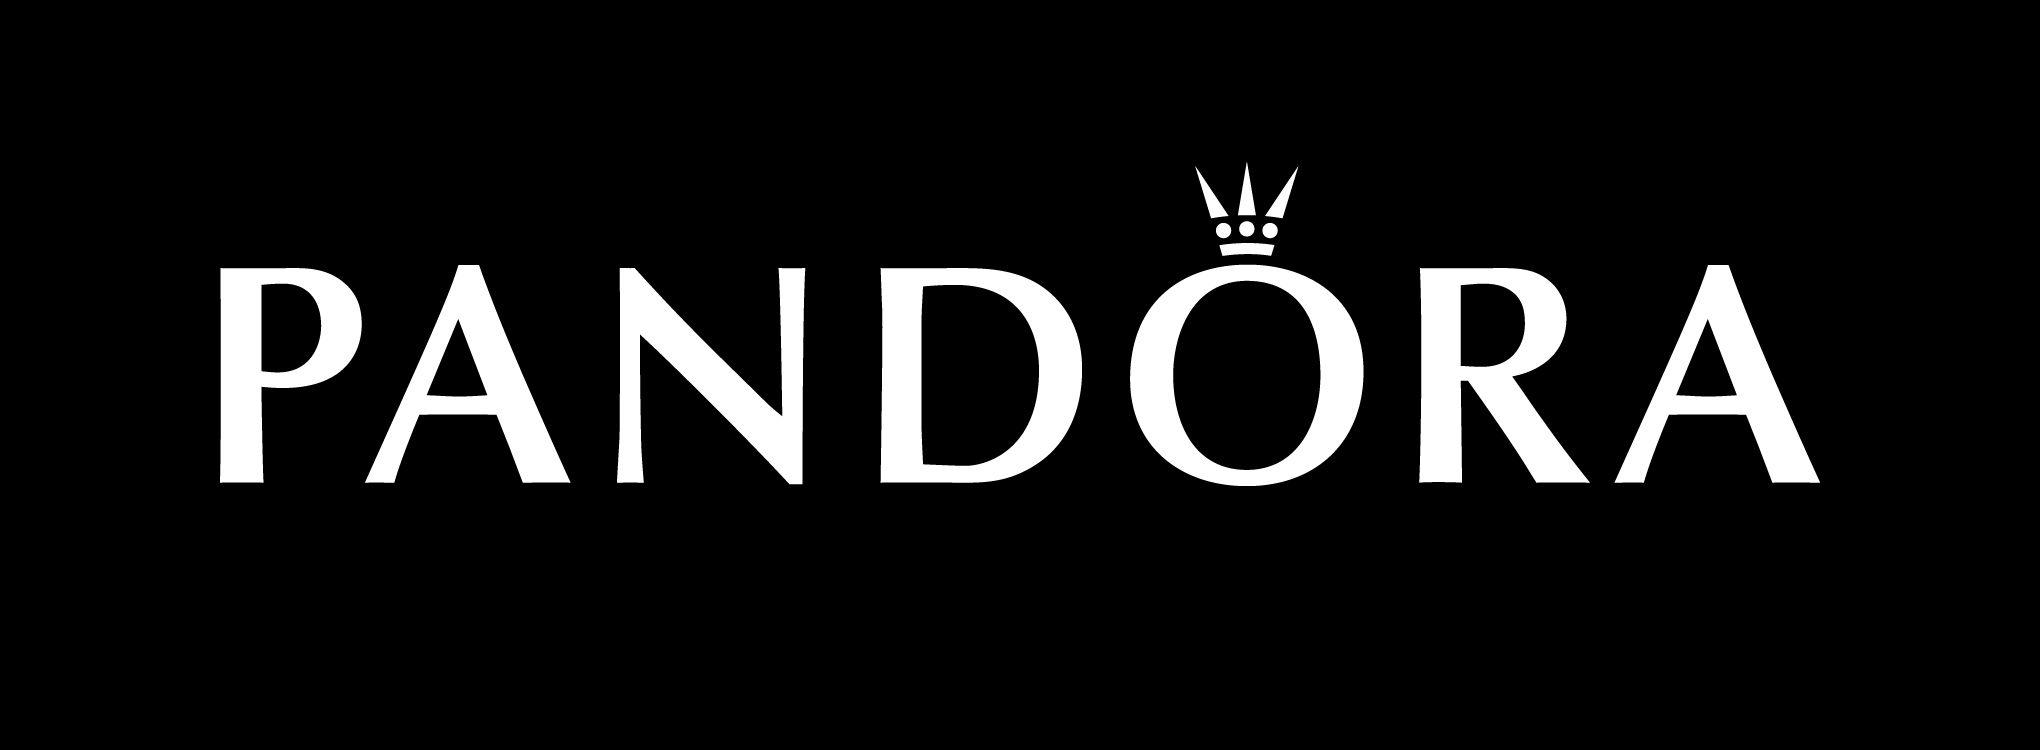 Pandora Logo - Pandora Logo, symbol, meaning, History and Evolution